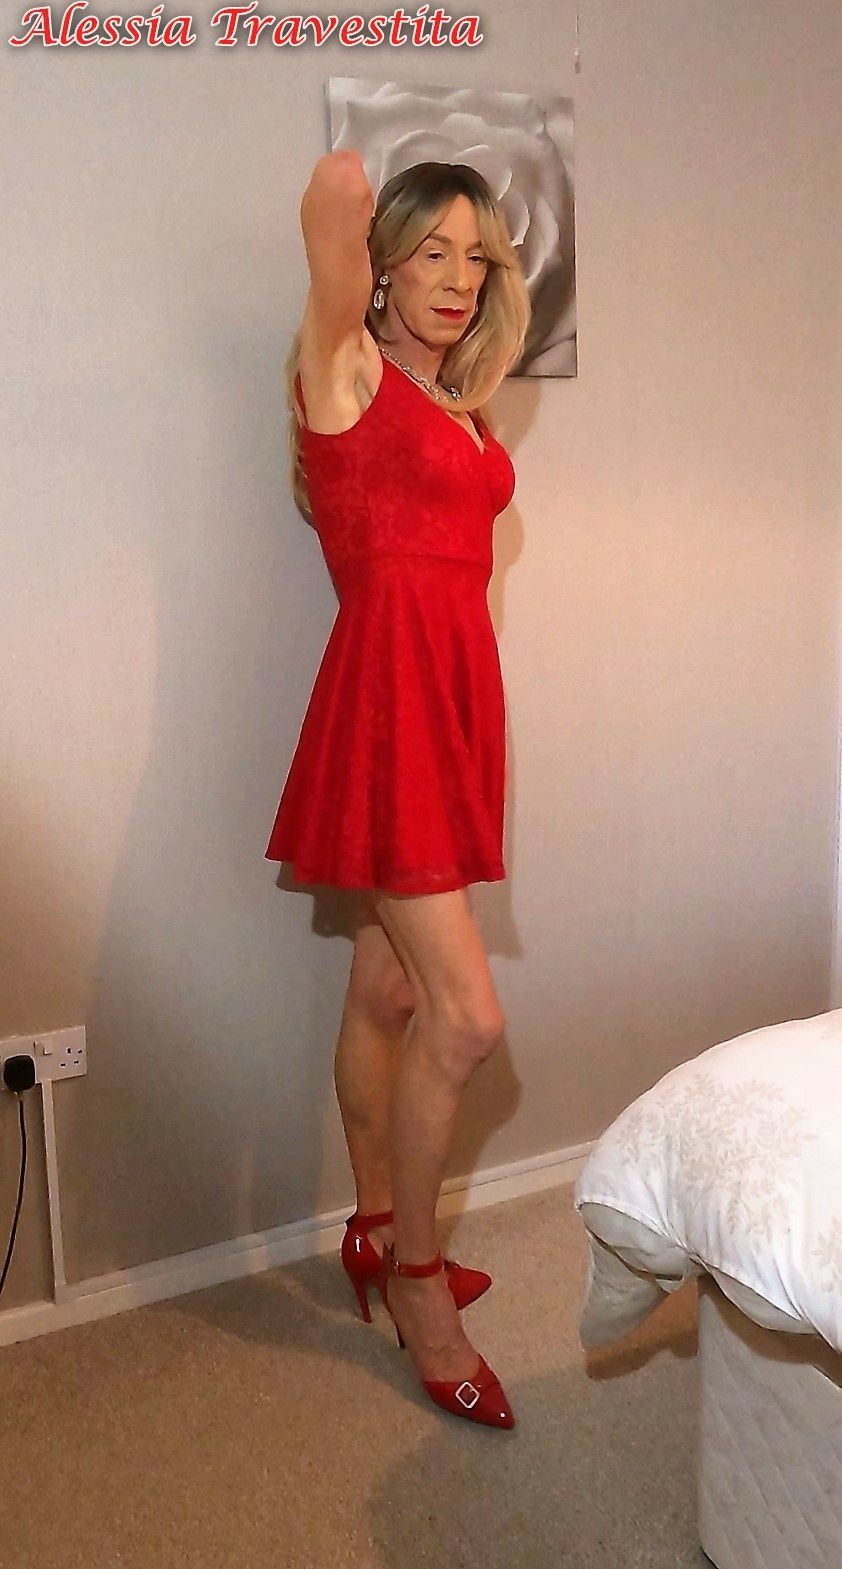 65 Alessia Travestita in Flirty Red Dress #48